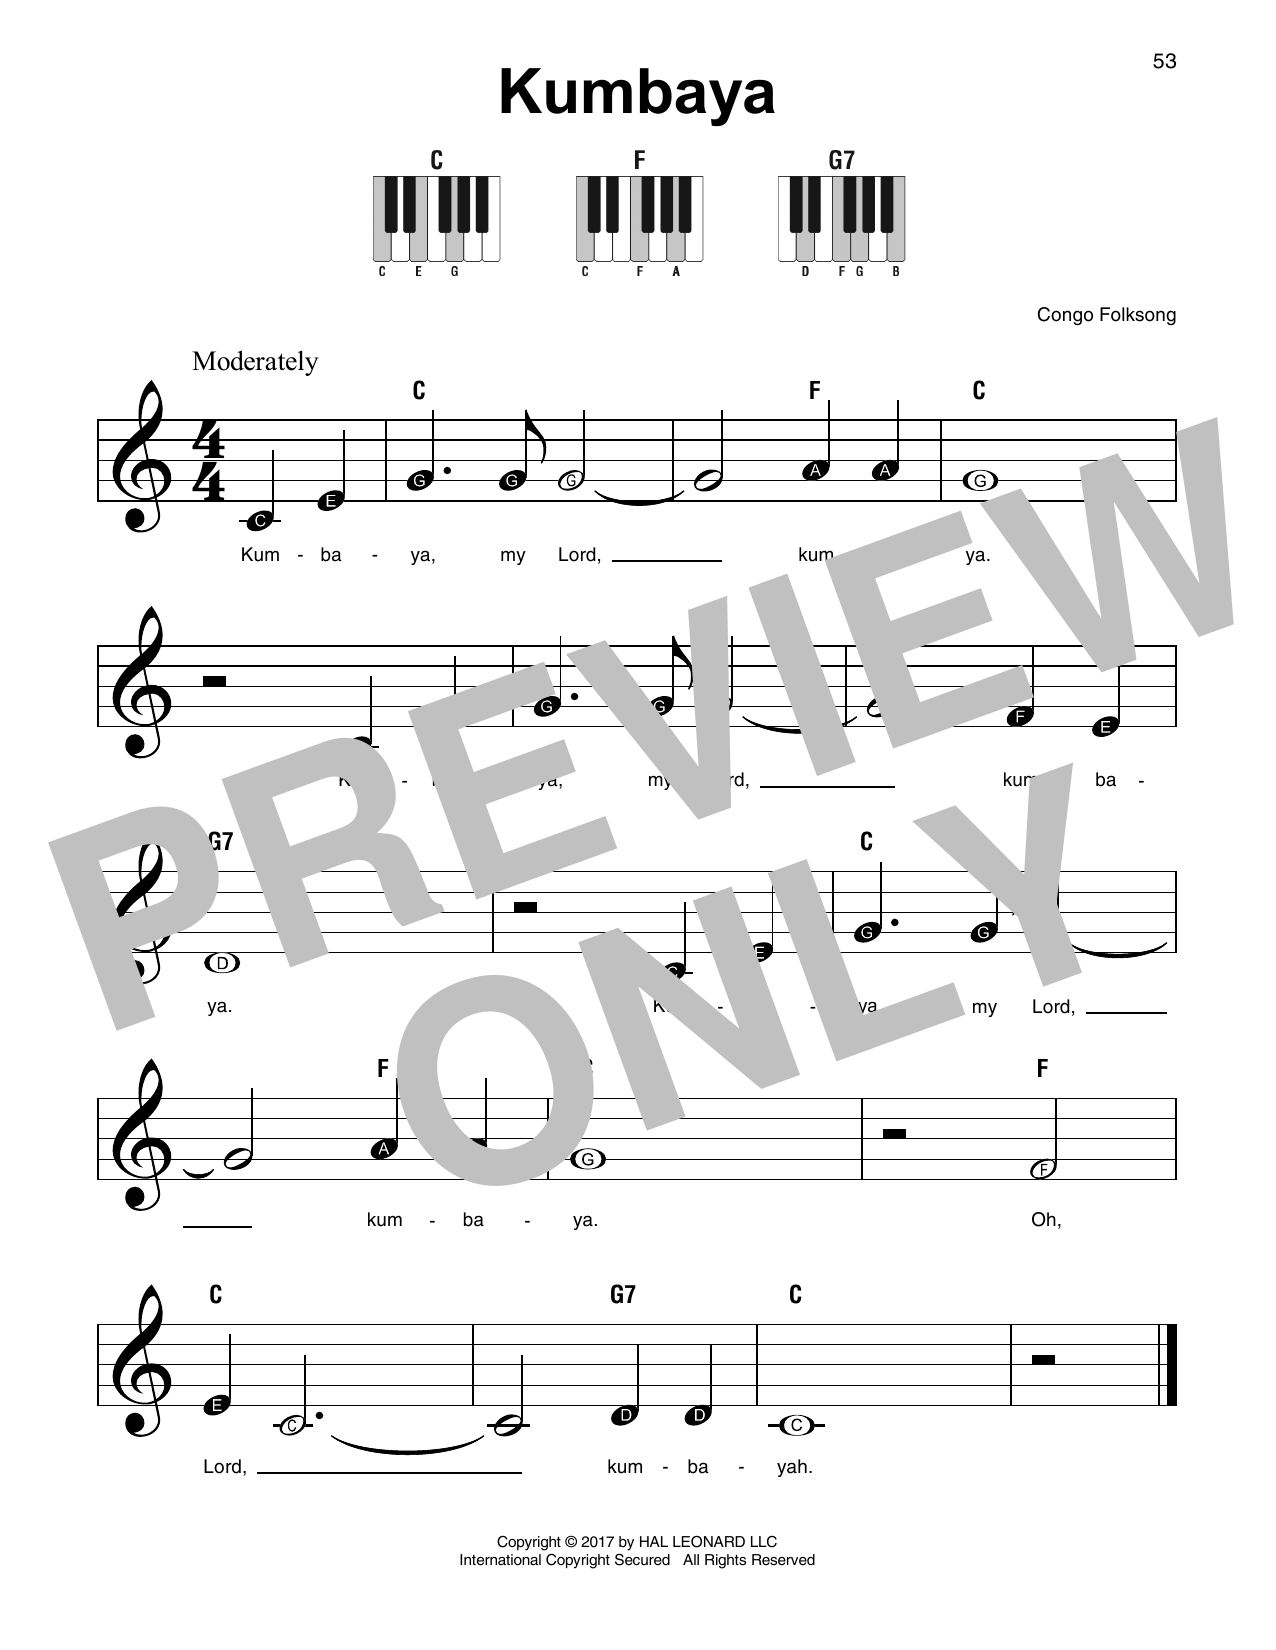 Congan Folksong Kumbaya Sheet Music Notes & Chords for SPREP - Download or Print PDF